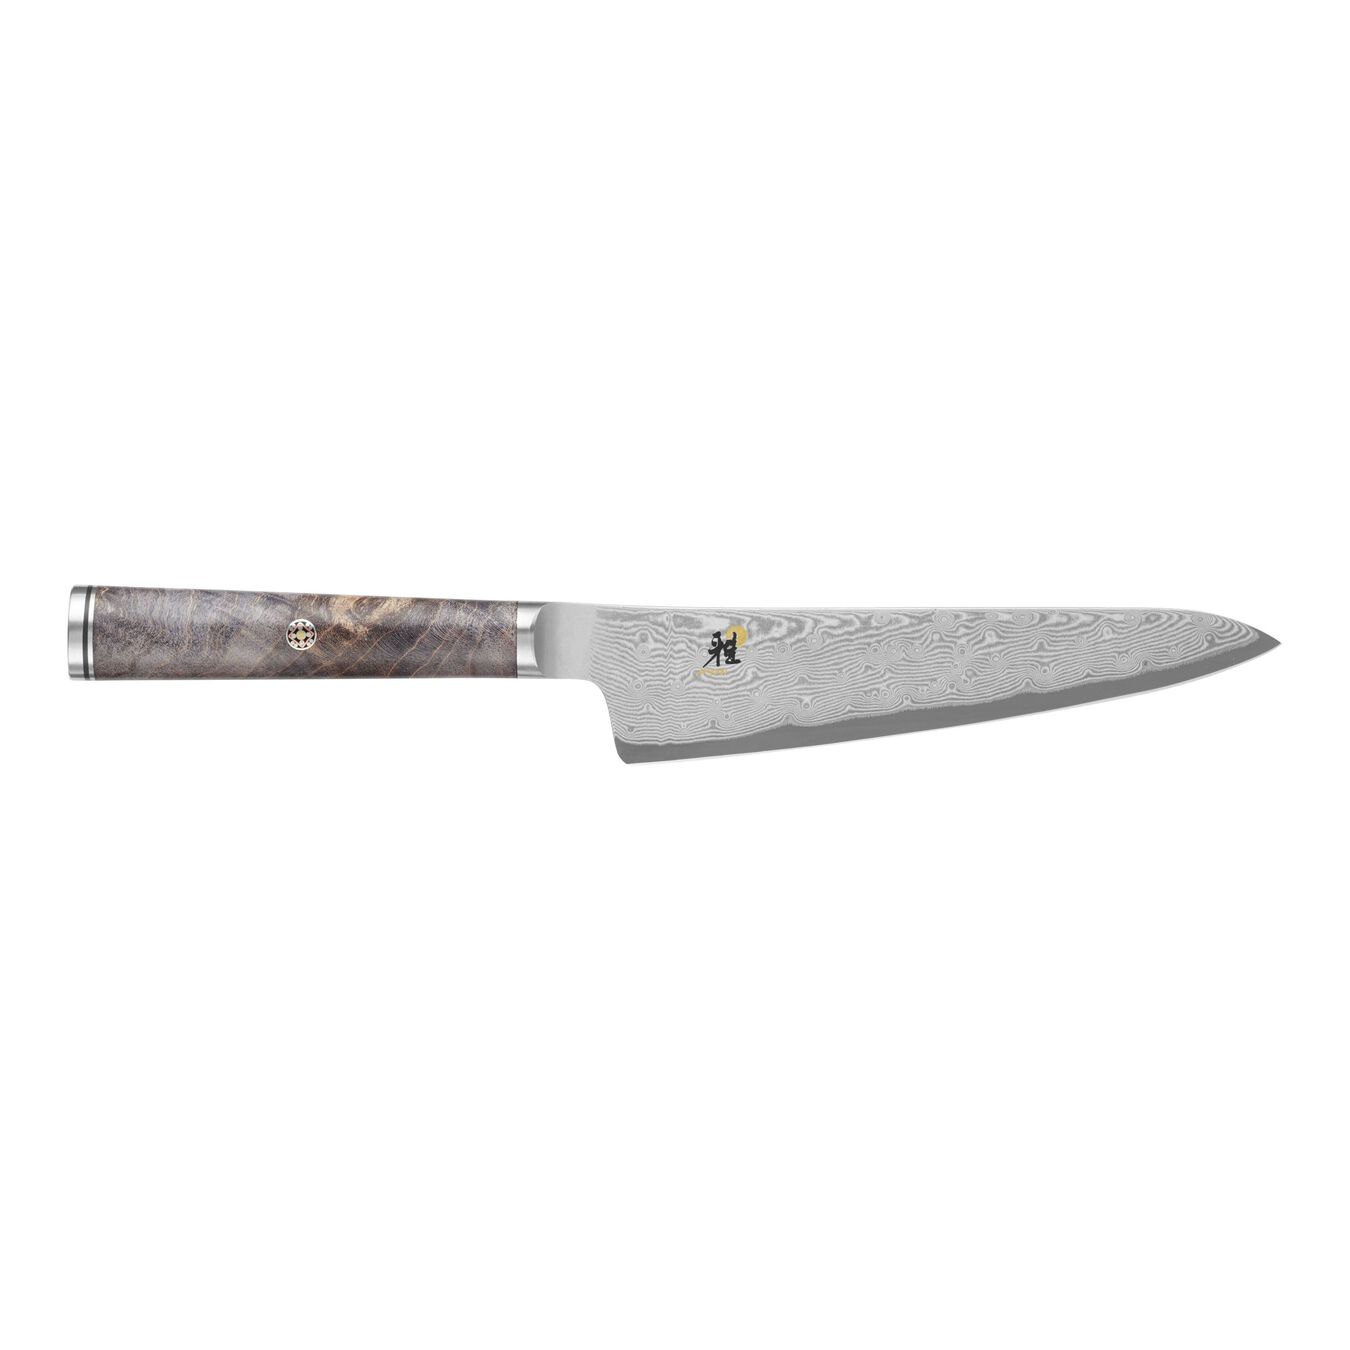 5-inch black maple Prep Knife,,large 1